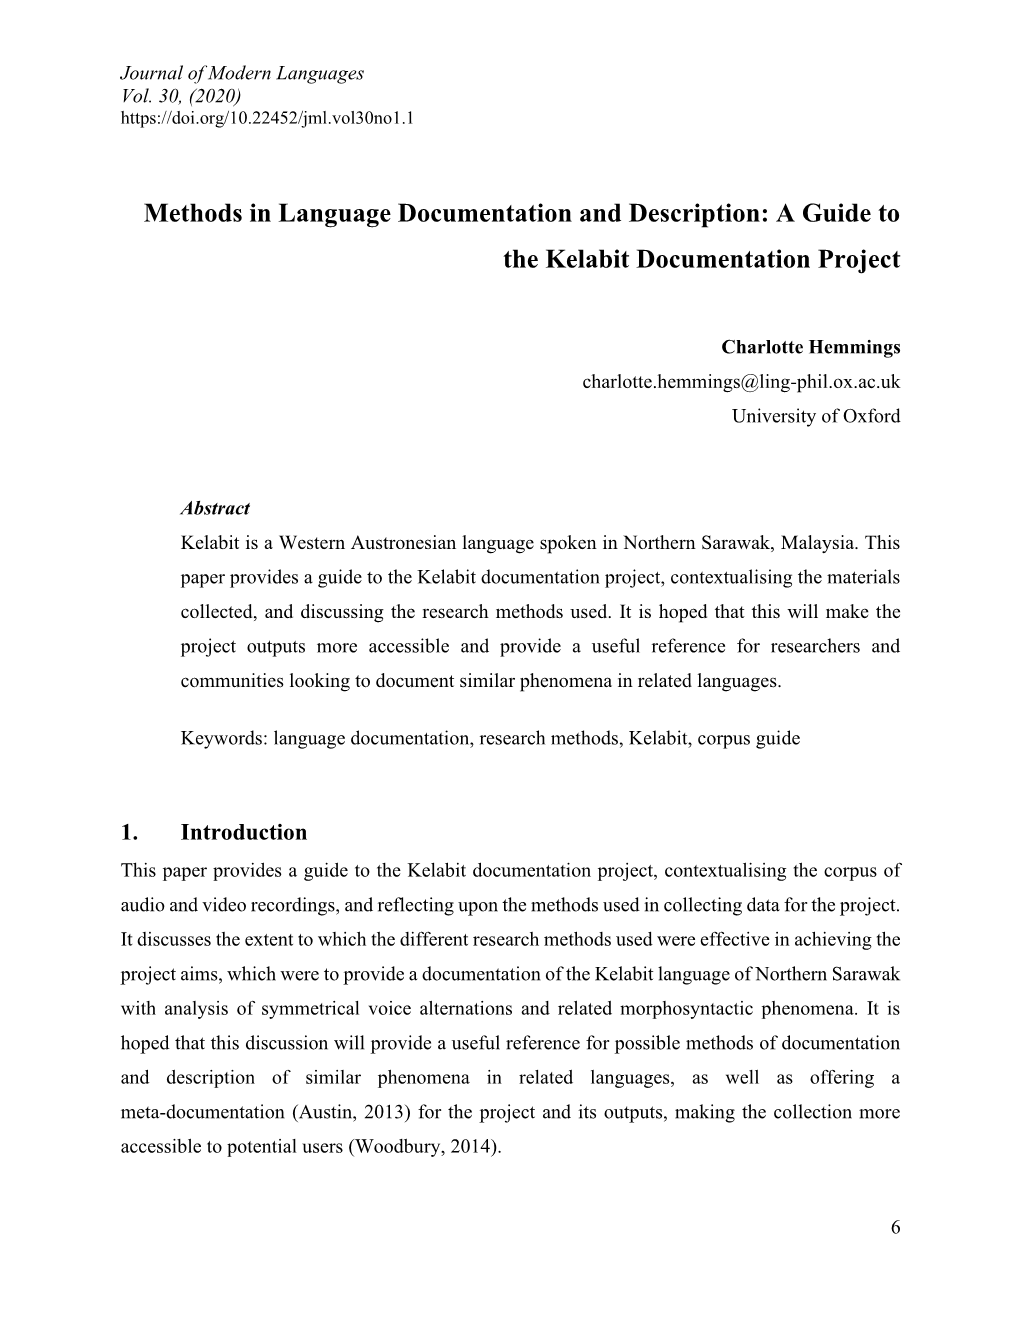 Methods in Language Documentation and Description: a Guide to the Kelabit Documentation Project